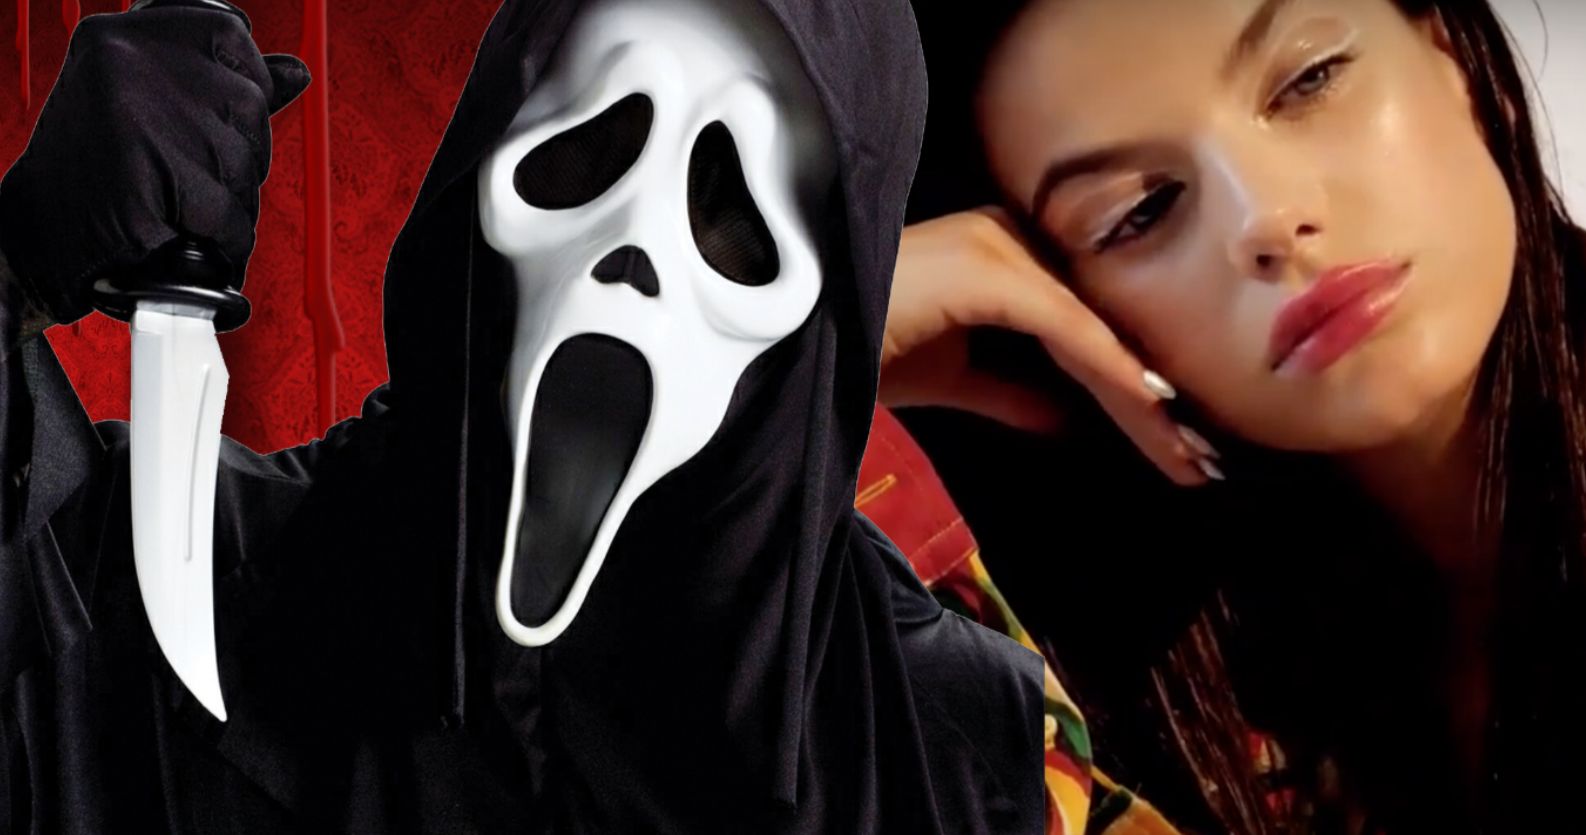 Scream 5 Films Later This Month, Singer/Model Sonia Ben Ammar Joins Cast